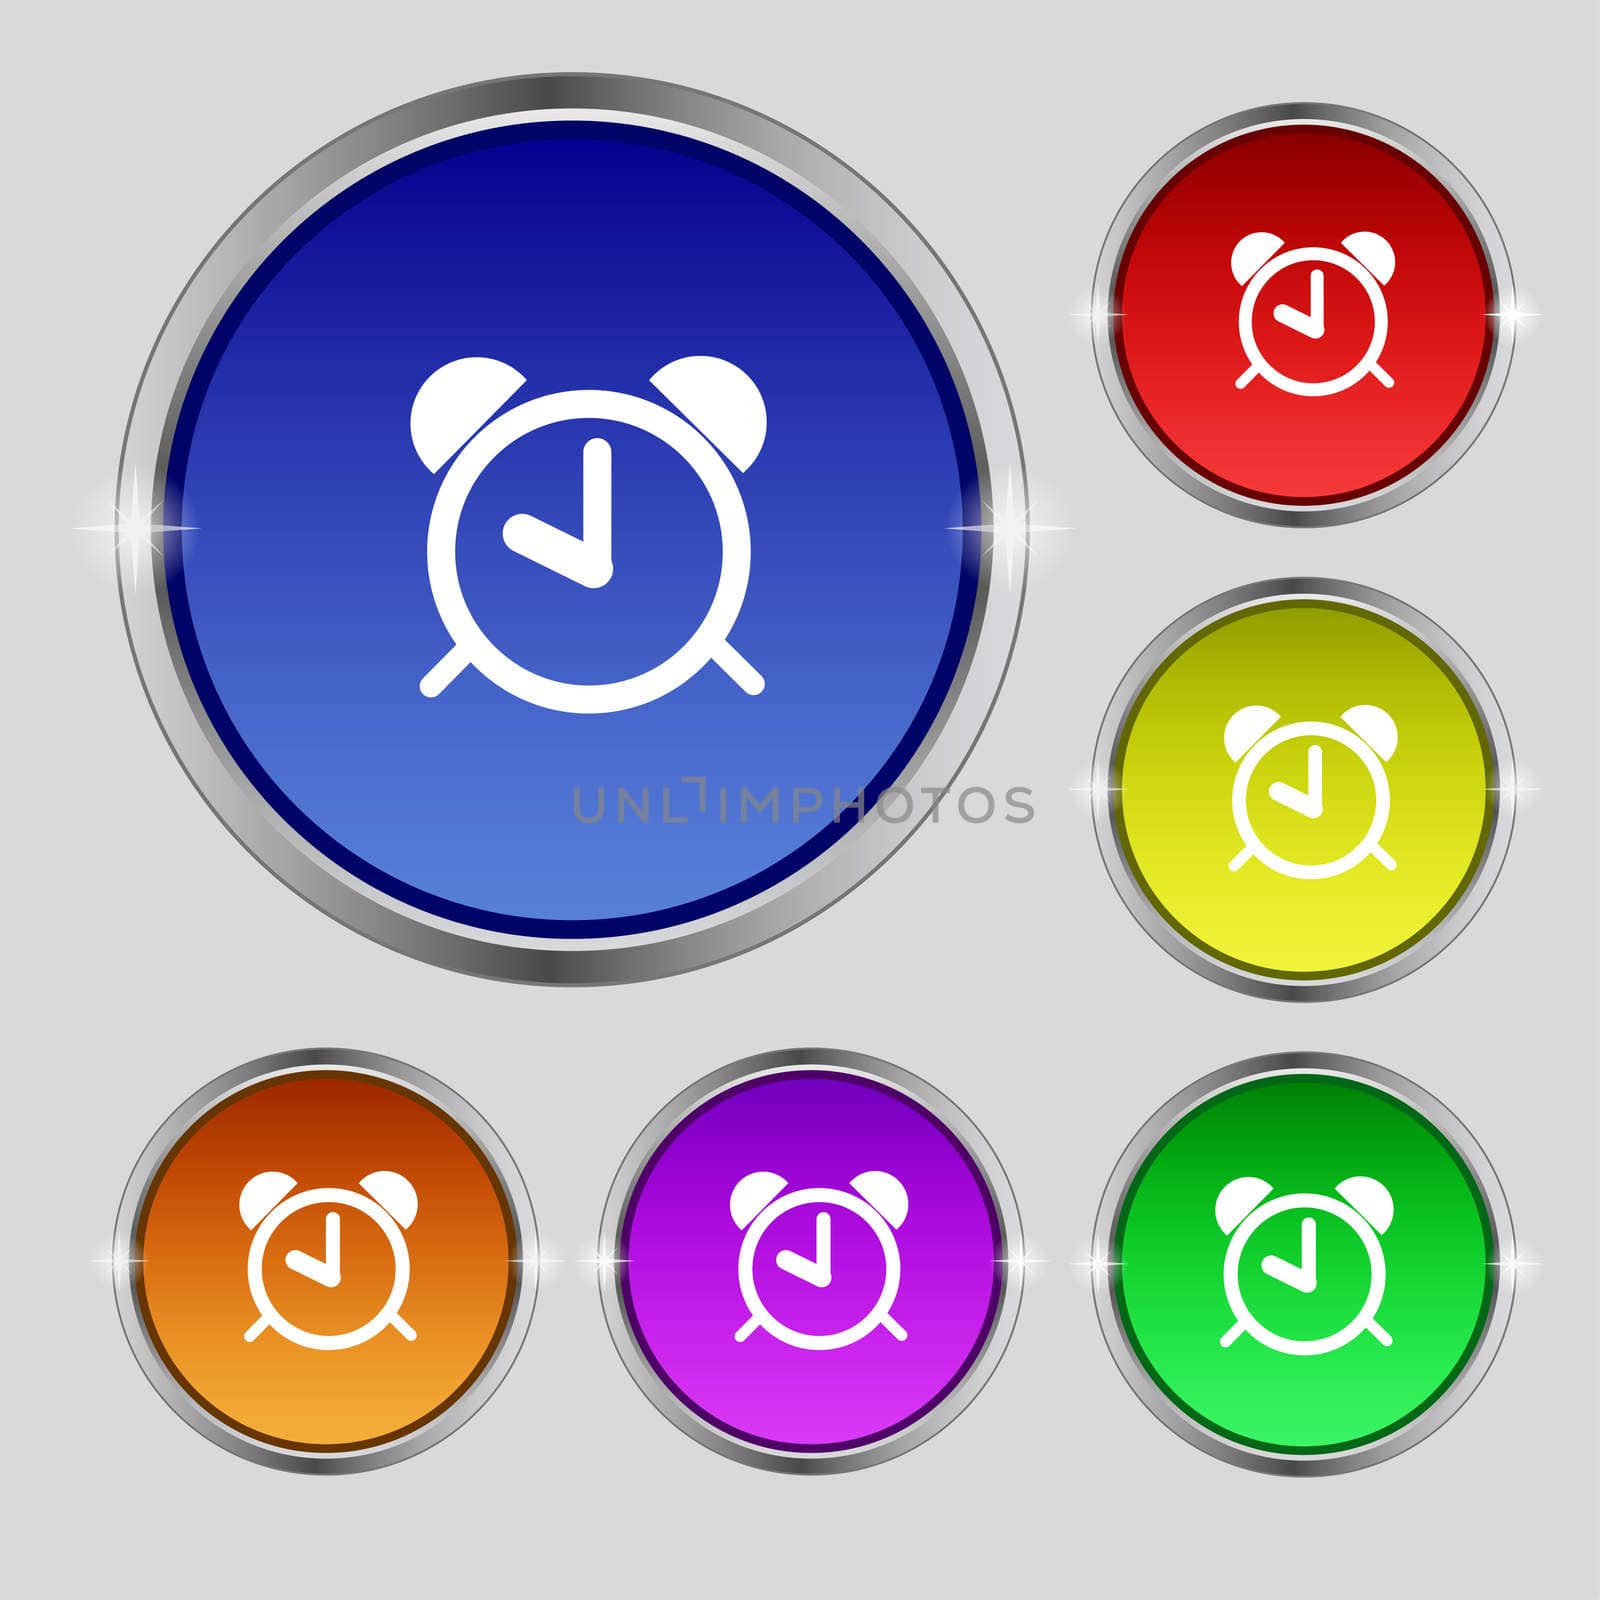 Alarm clock sign icon. Wake up alarm symbol. Set colourful buttons. illustration